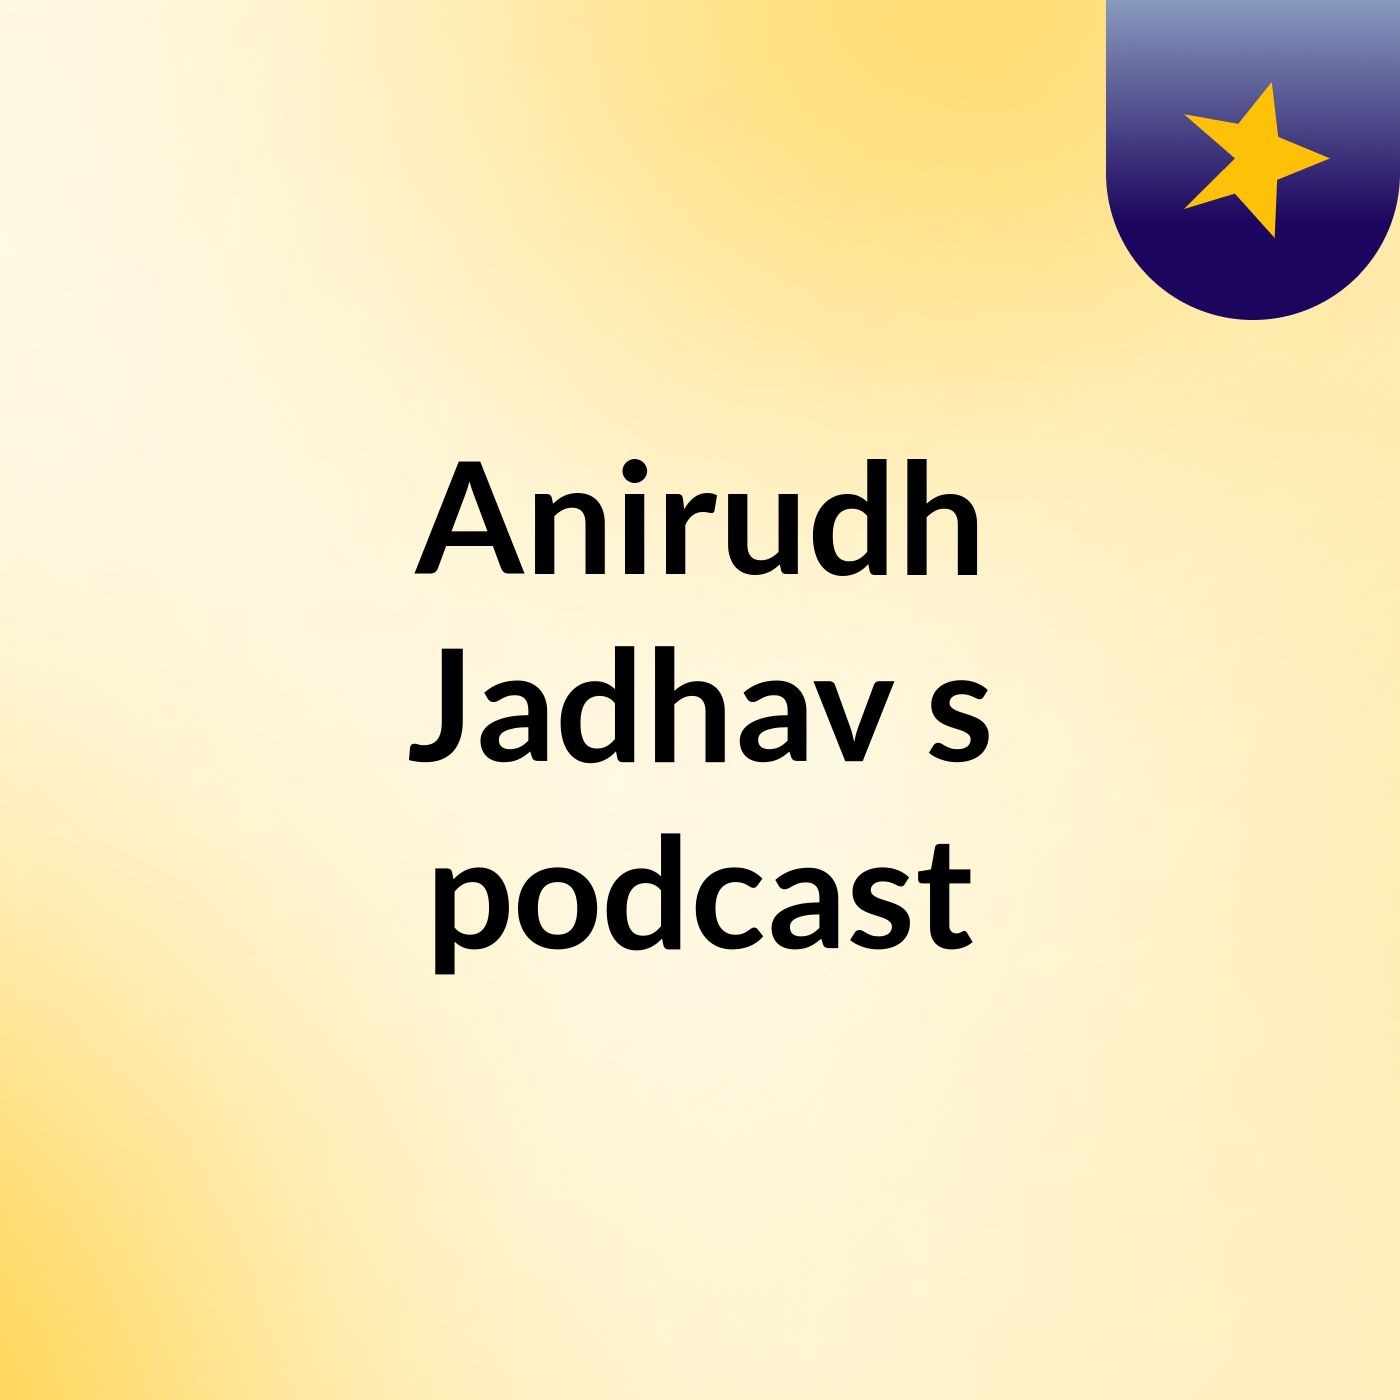 Episode 2 - Anirudh Jadhav's podcast